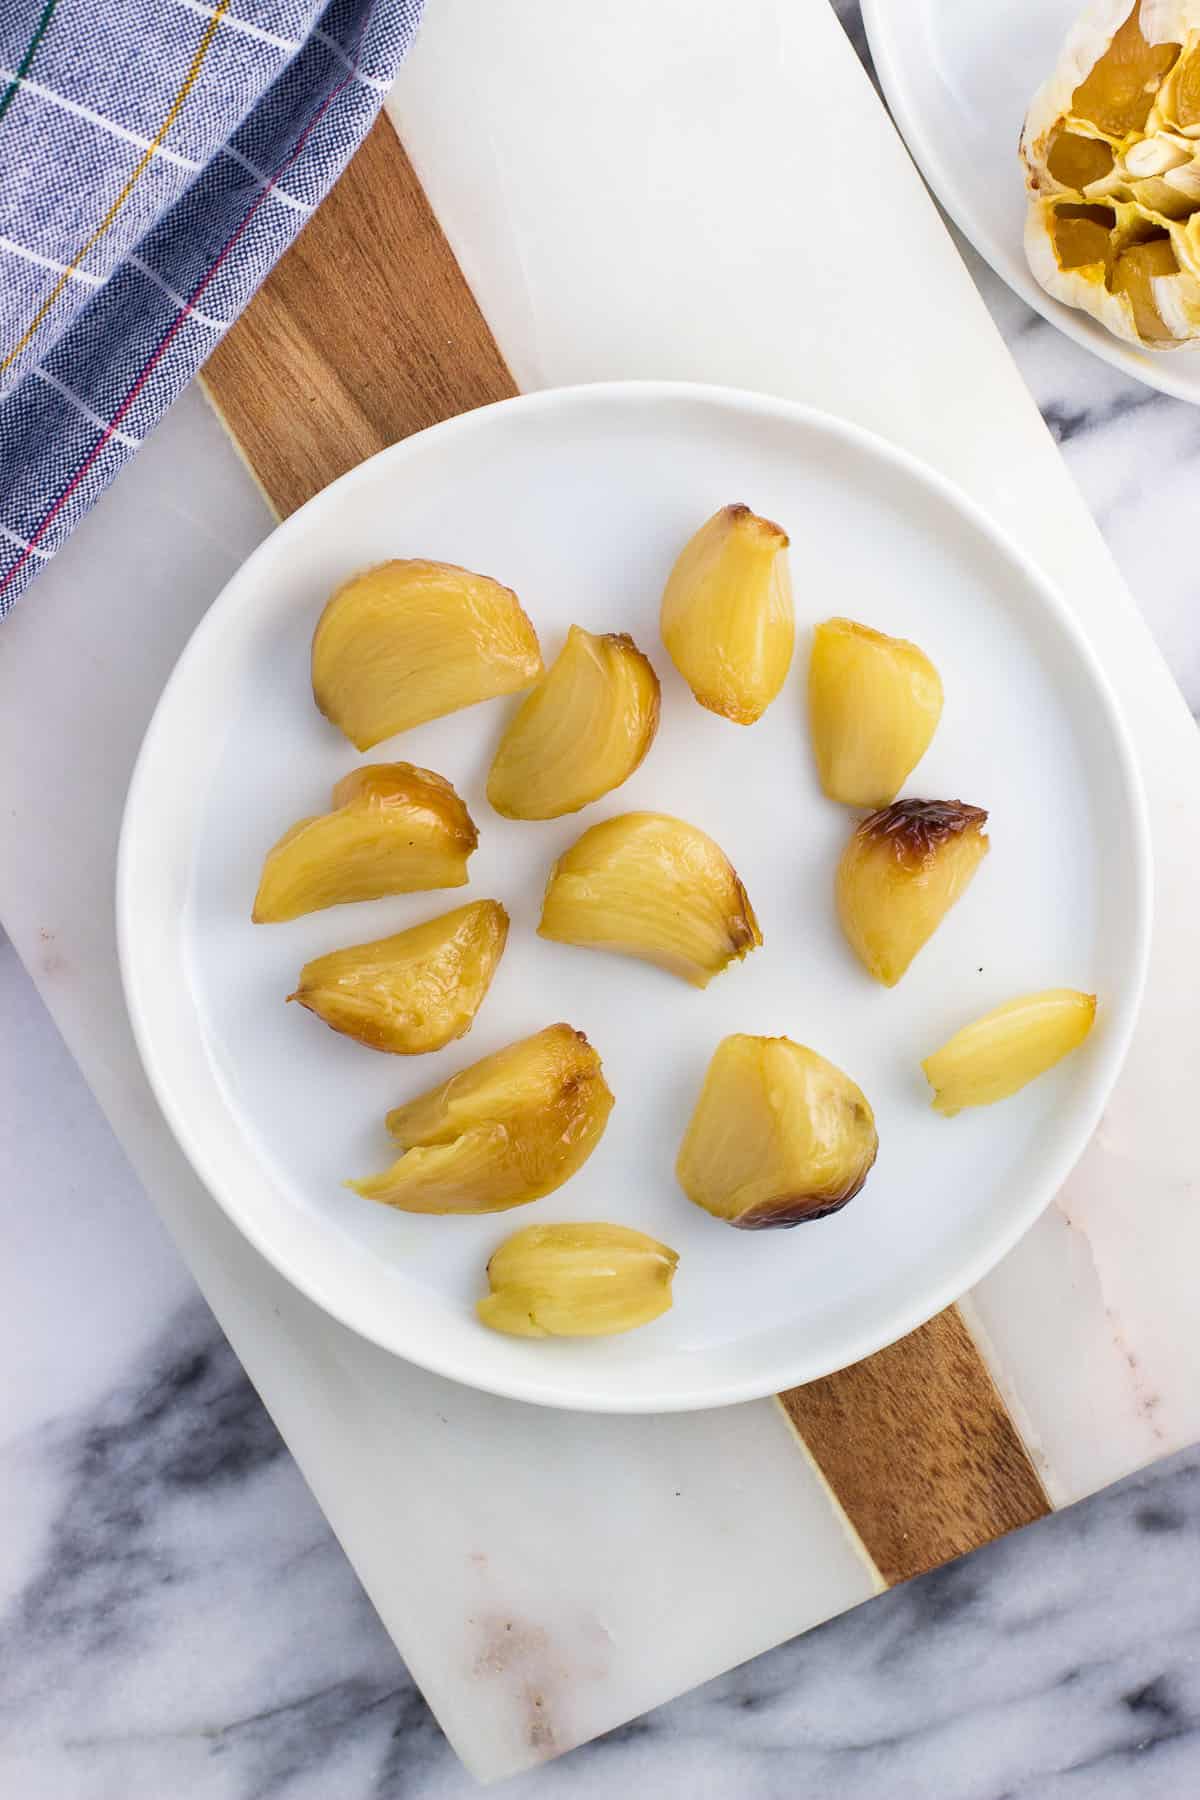 Twelve roasted garlic cloves on a plate.